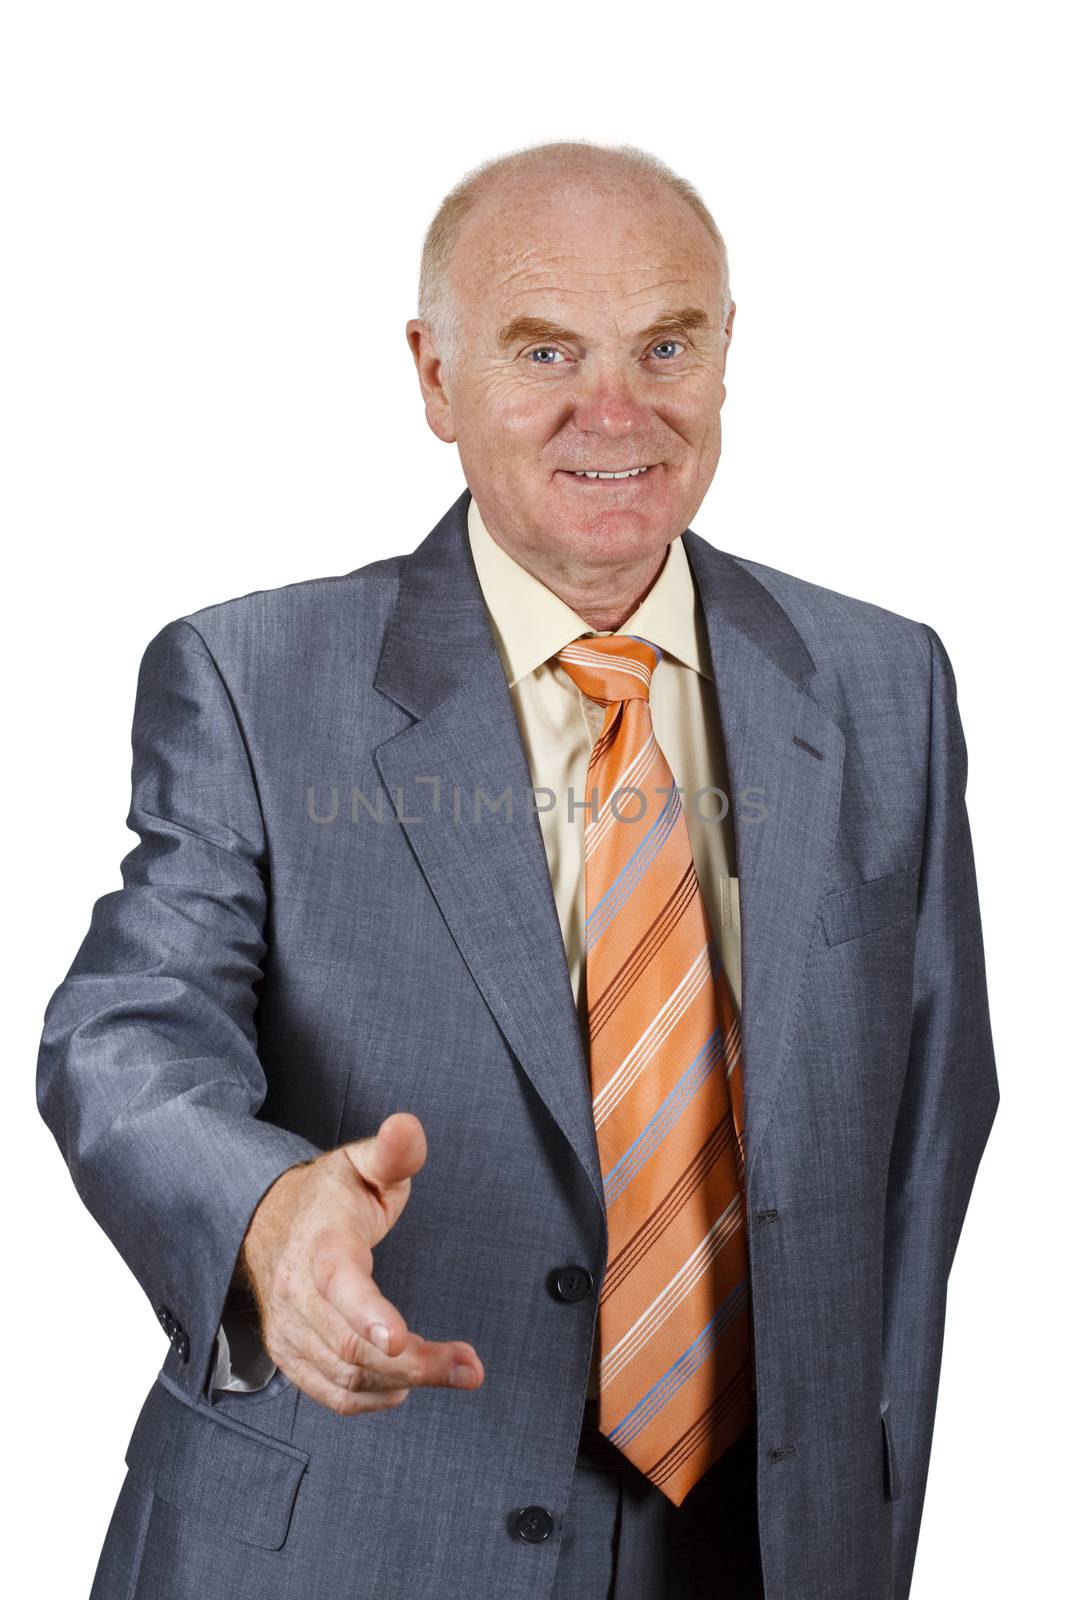 A senior businessman offering for handshake.